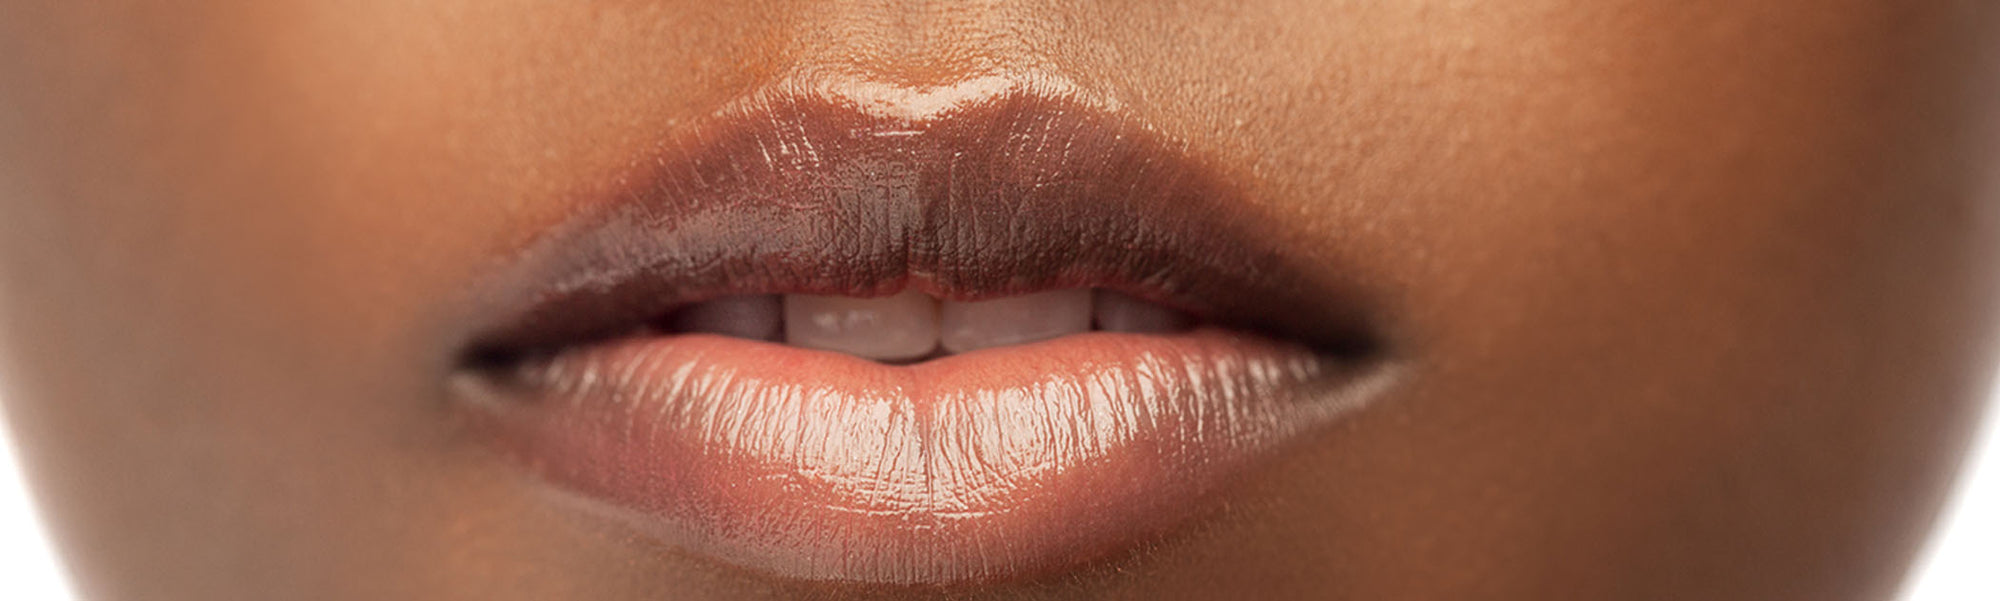 Lighten Your Dark Lips With Effective Home Remedies